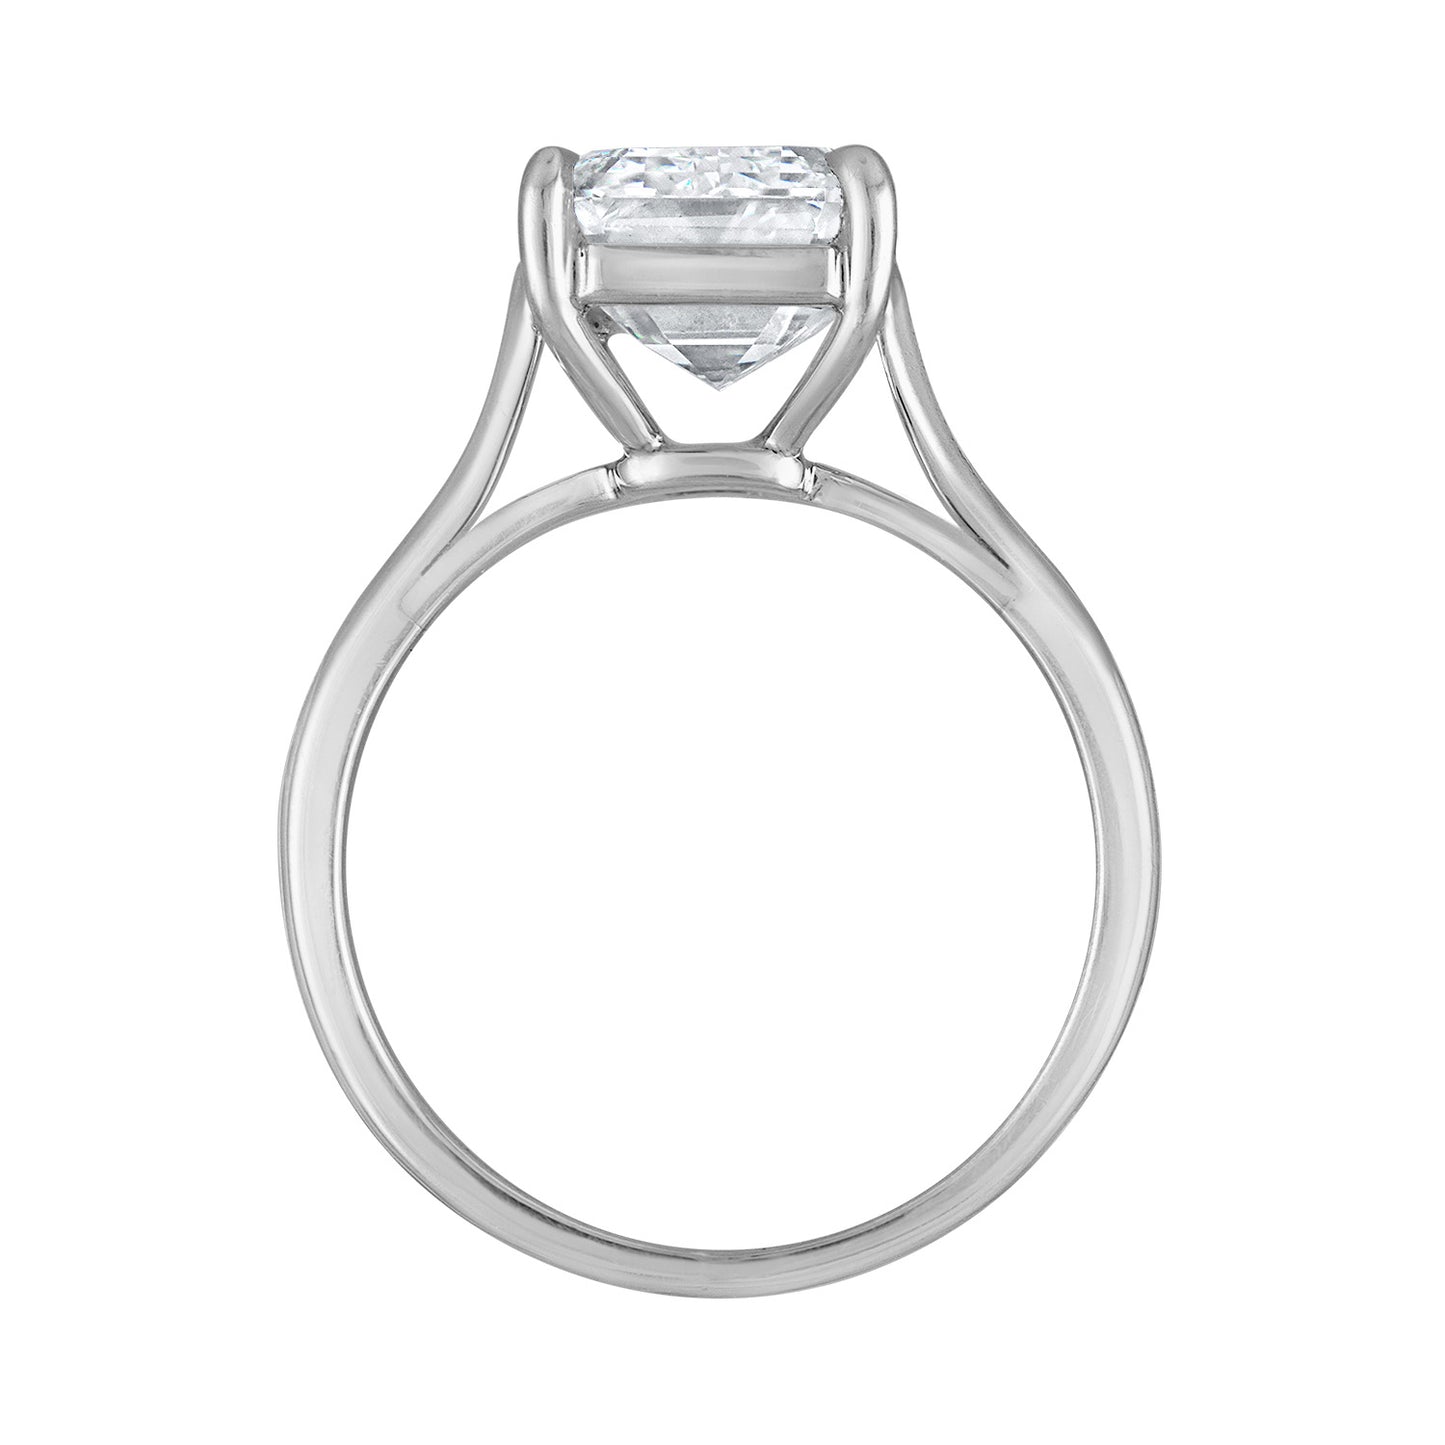 Five Carat Emerald Cut Solitaire Diamond Ring